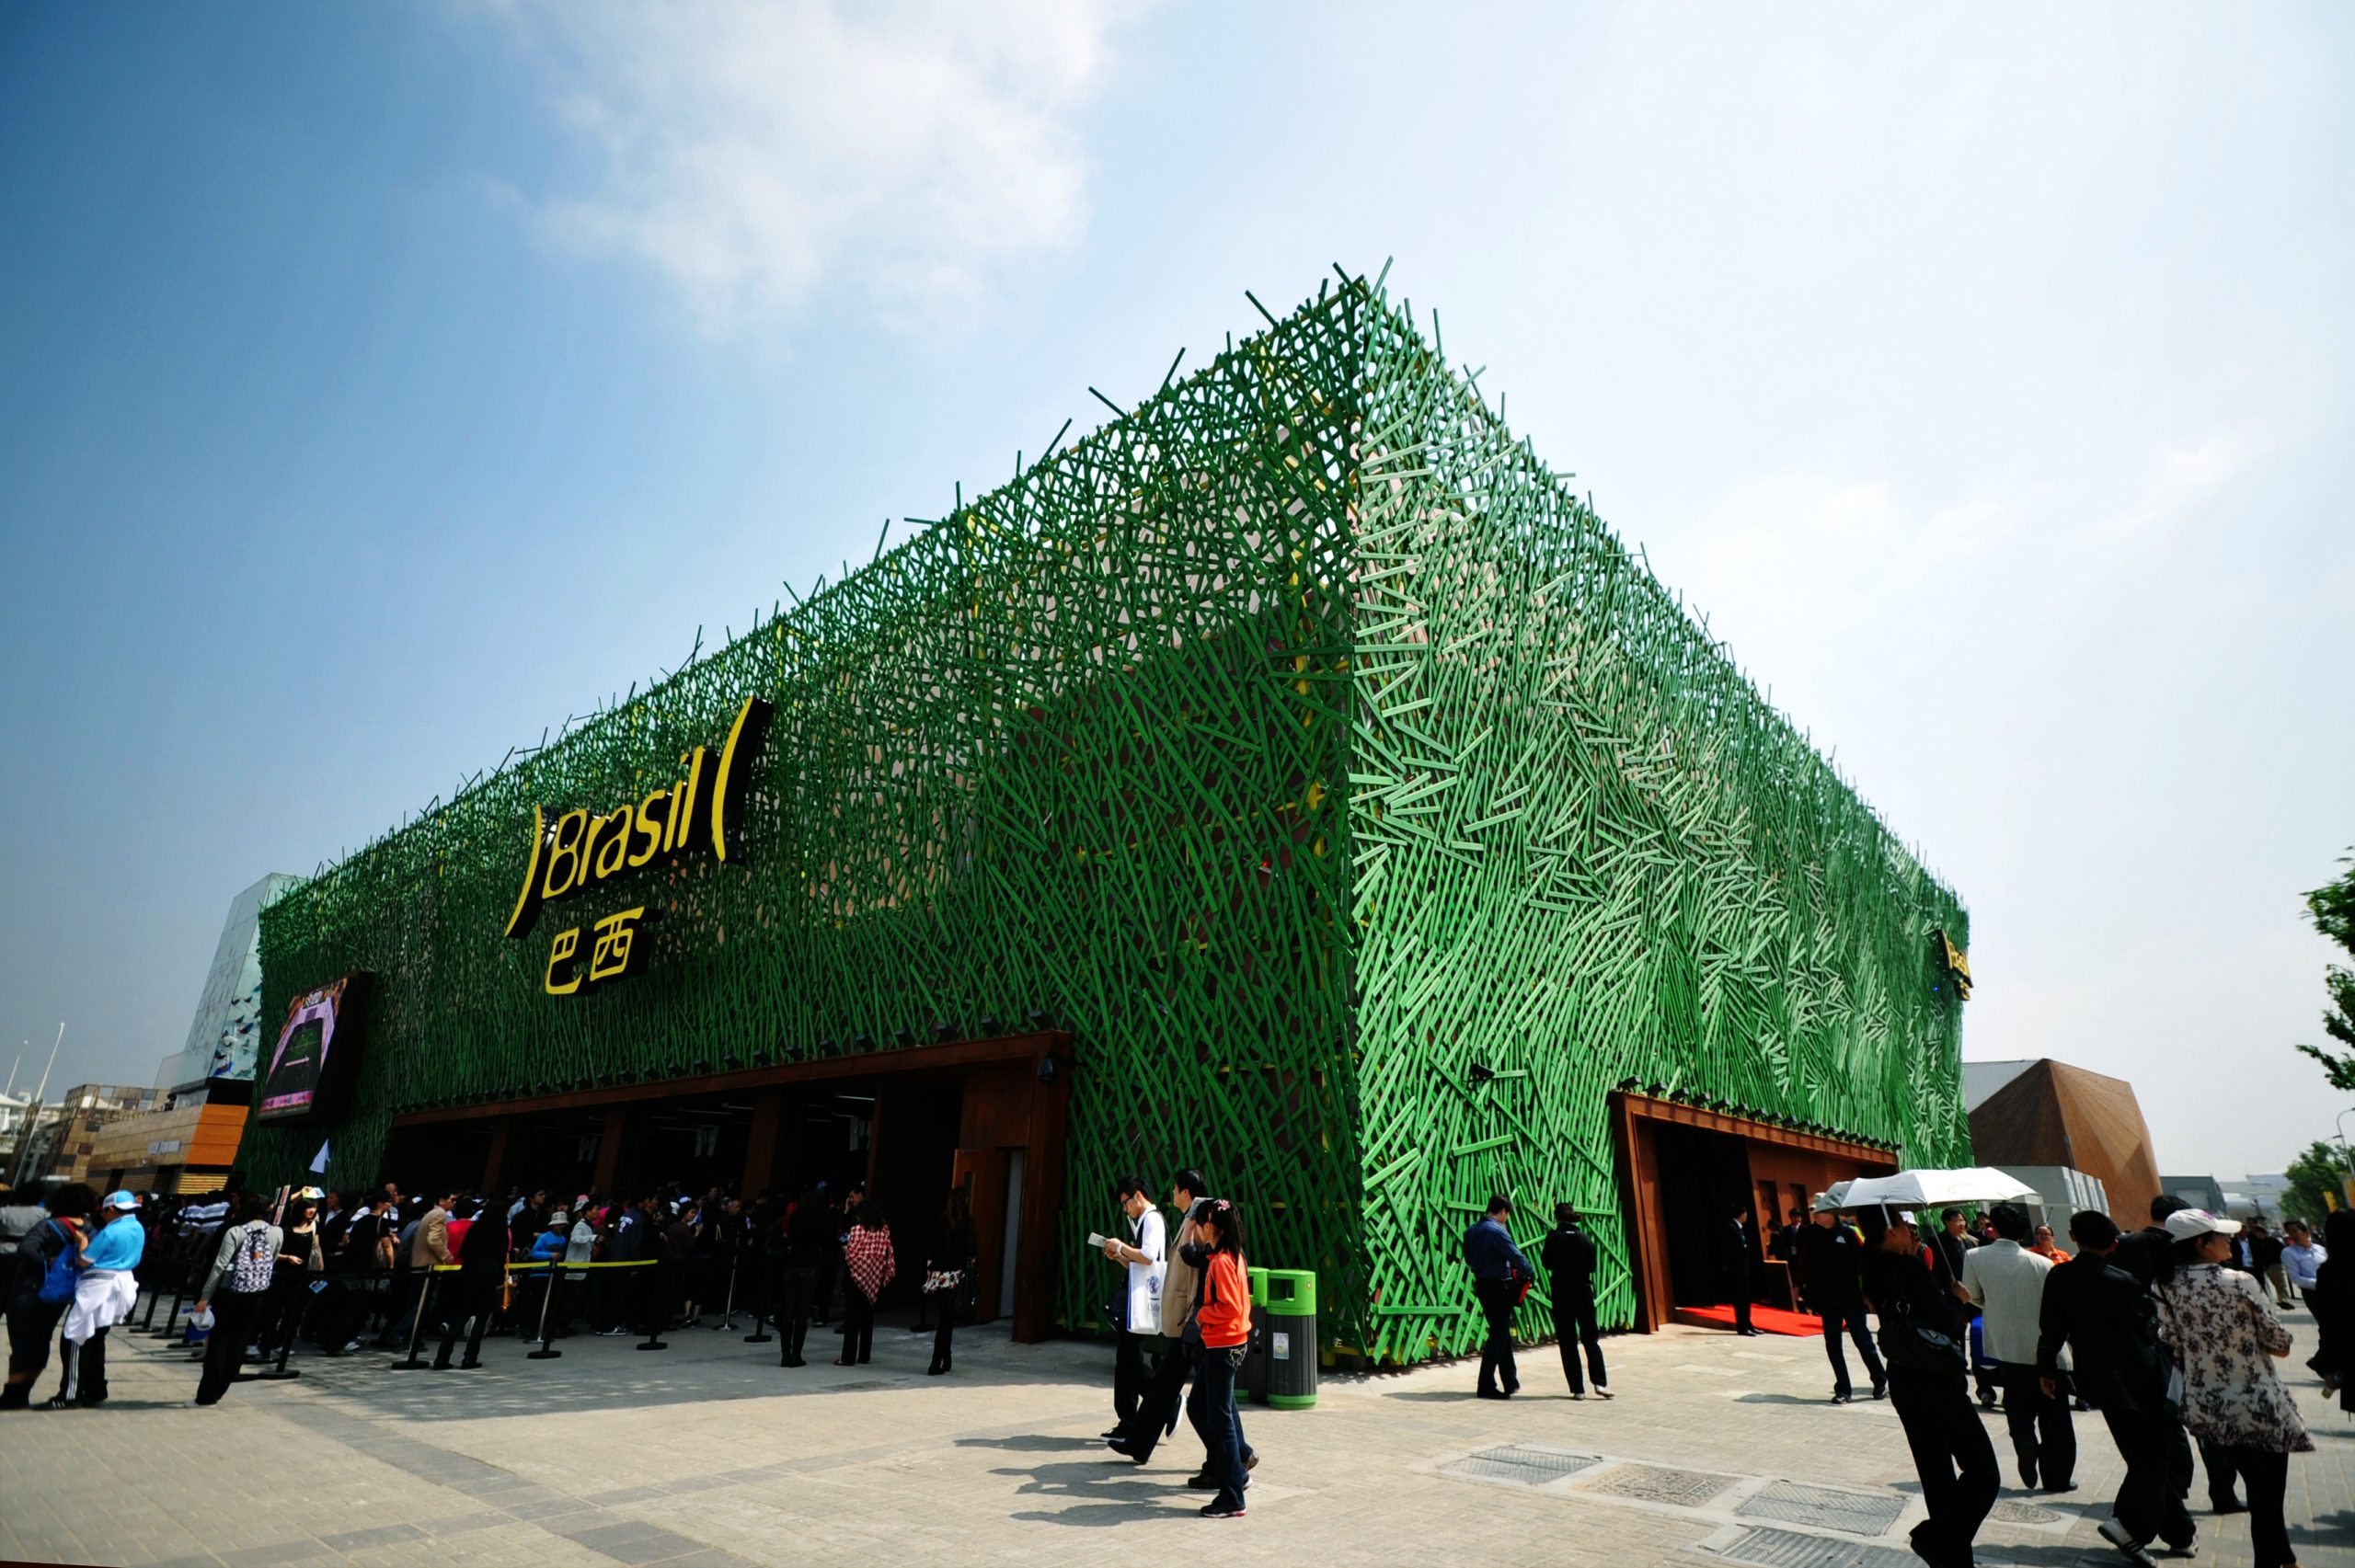 World Expo Shanghai Brasil Pavilion